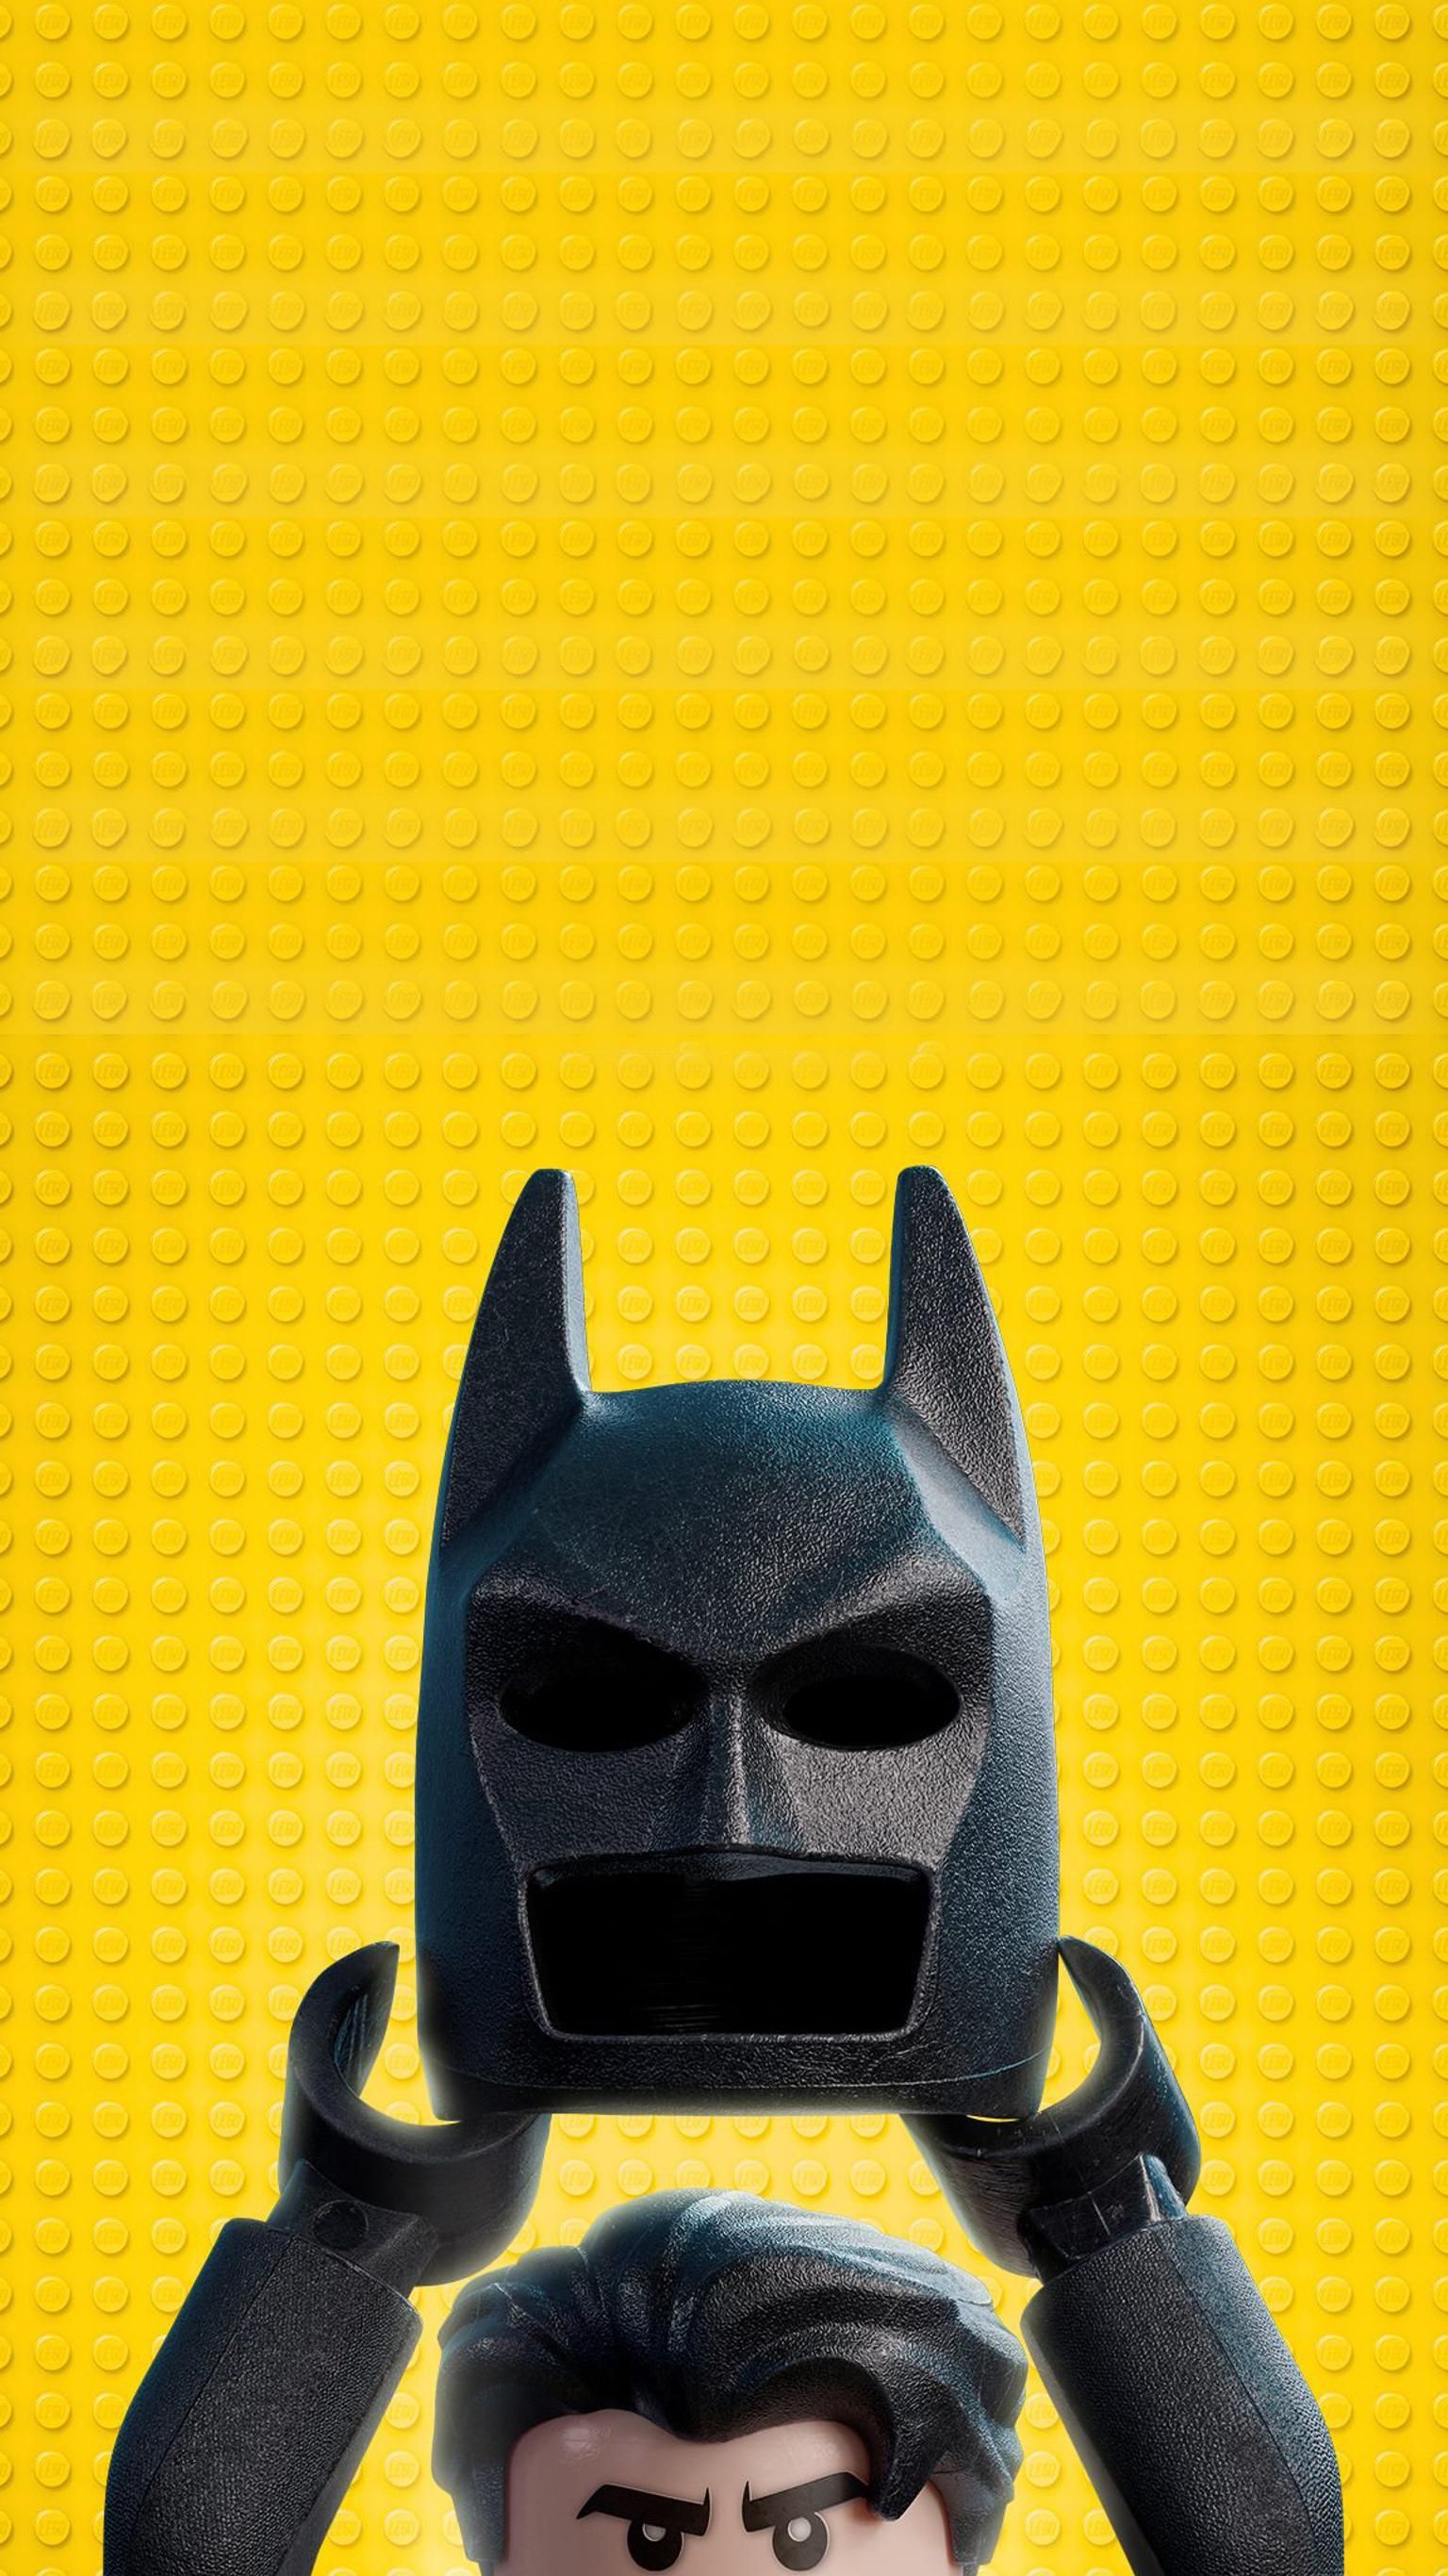 The Lego Batman Movie (2017) Phone Wallpaper. Moviemania. Lego batman wallpaper, Batman wallpaper, Lego batman movie